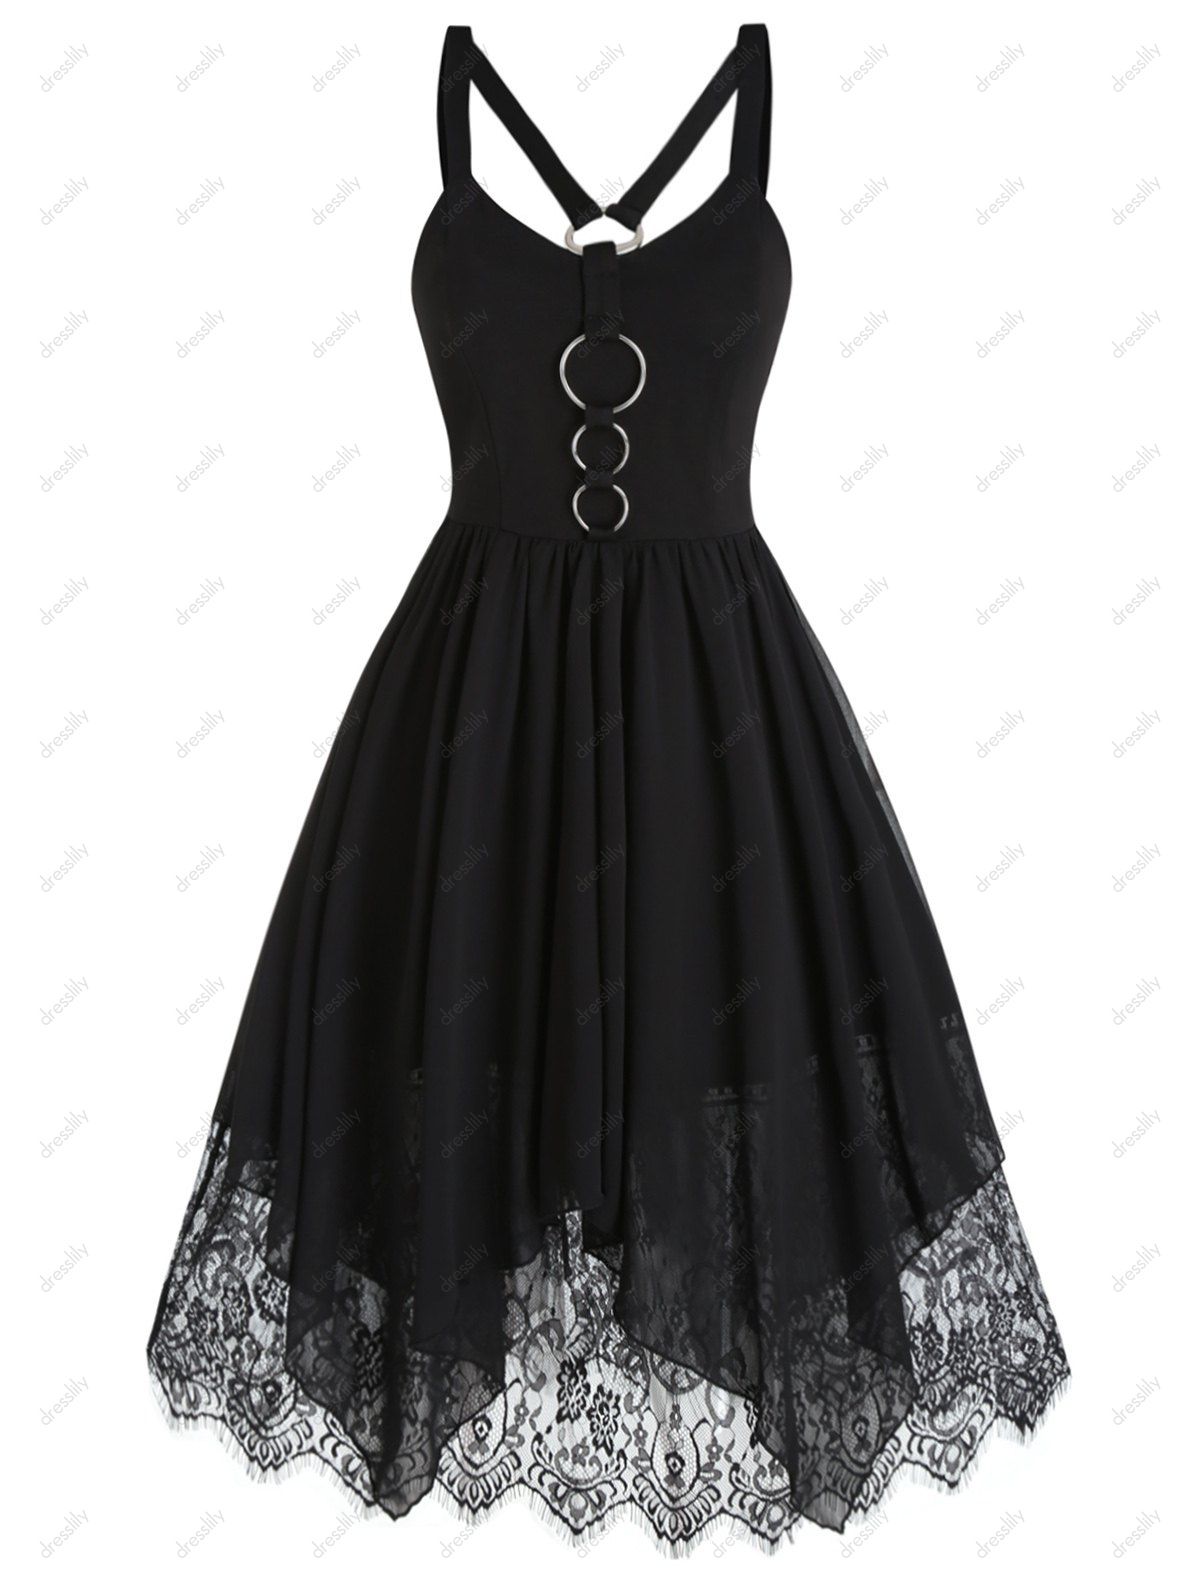 Floral Lace Chiffon Dress O Rings Asymmetric Gothic Dress Backless High Waist Dress - BLACK S